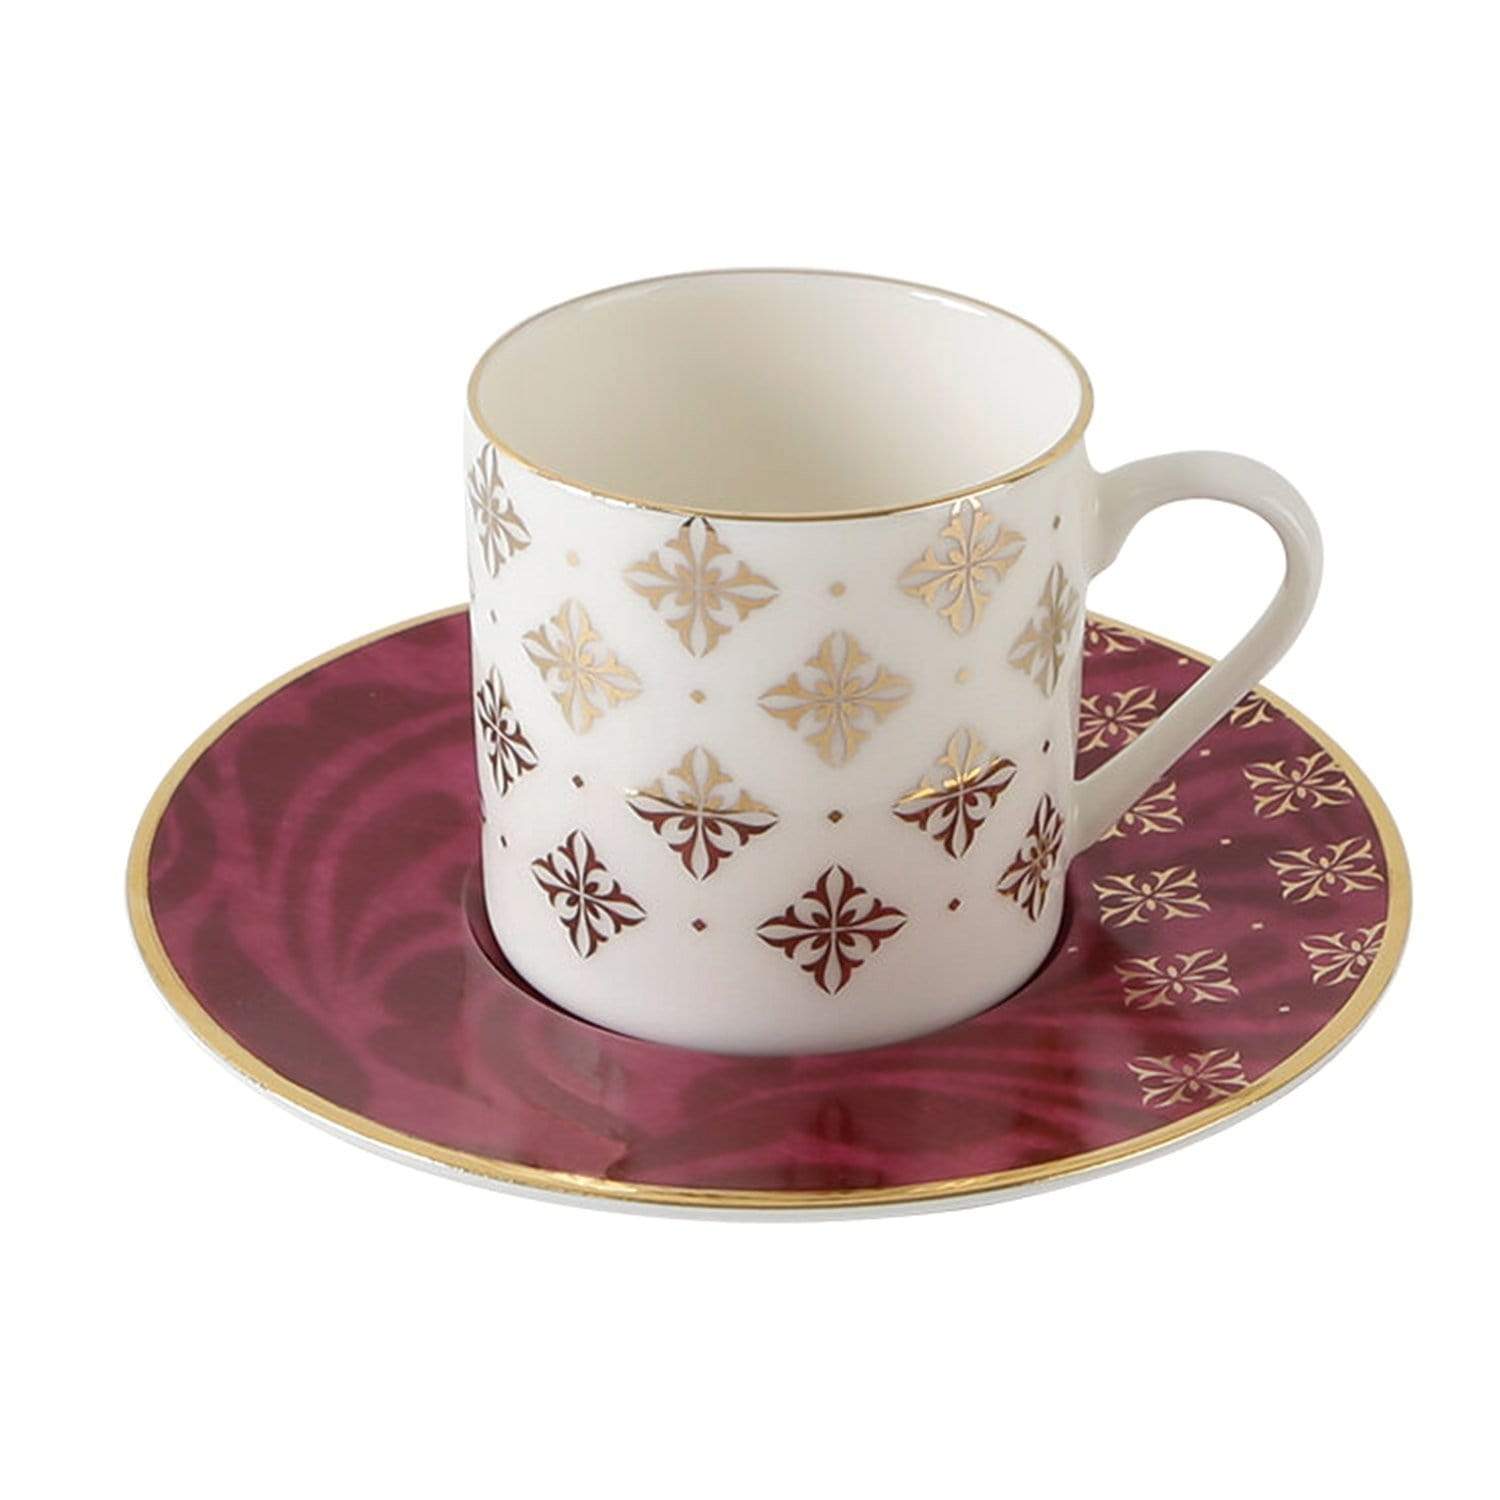 Porland Porselen Evoke Design 4 فنجان قهوة و صحن - أبيض و وردي - 04ALM002751 - Jashanmal Home